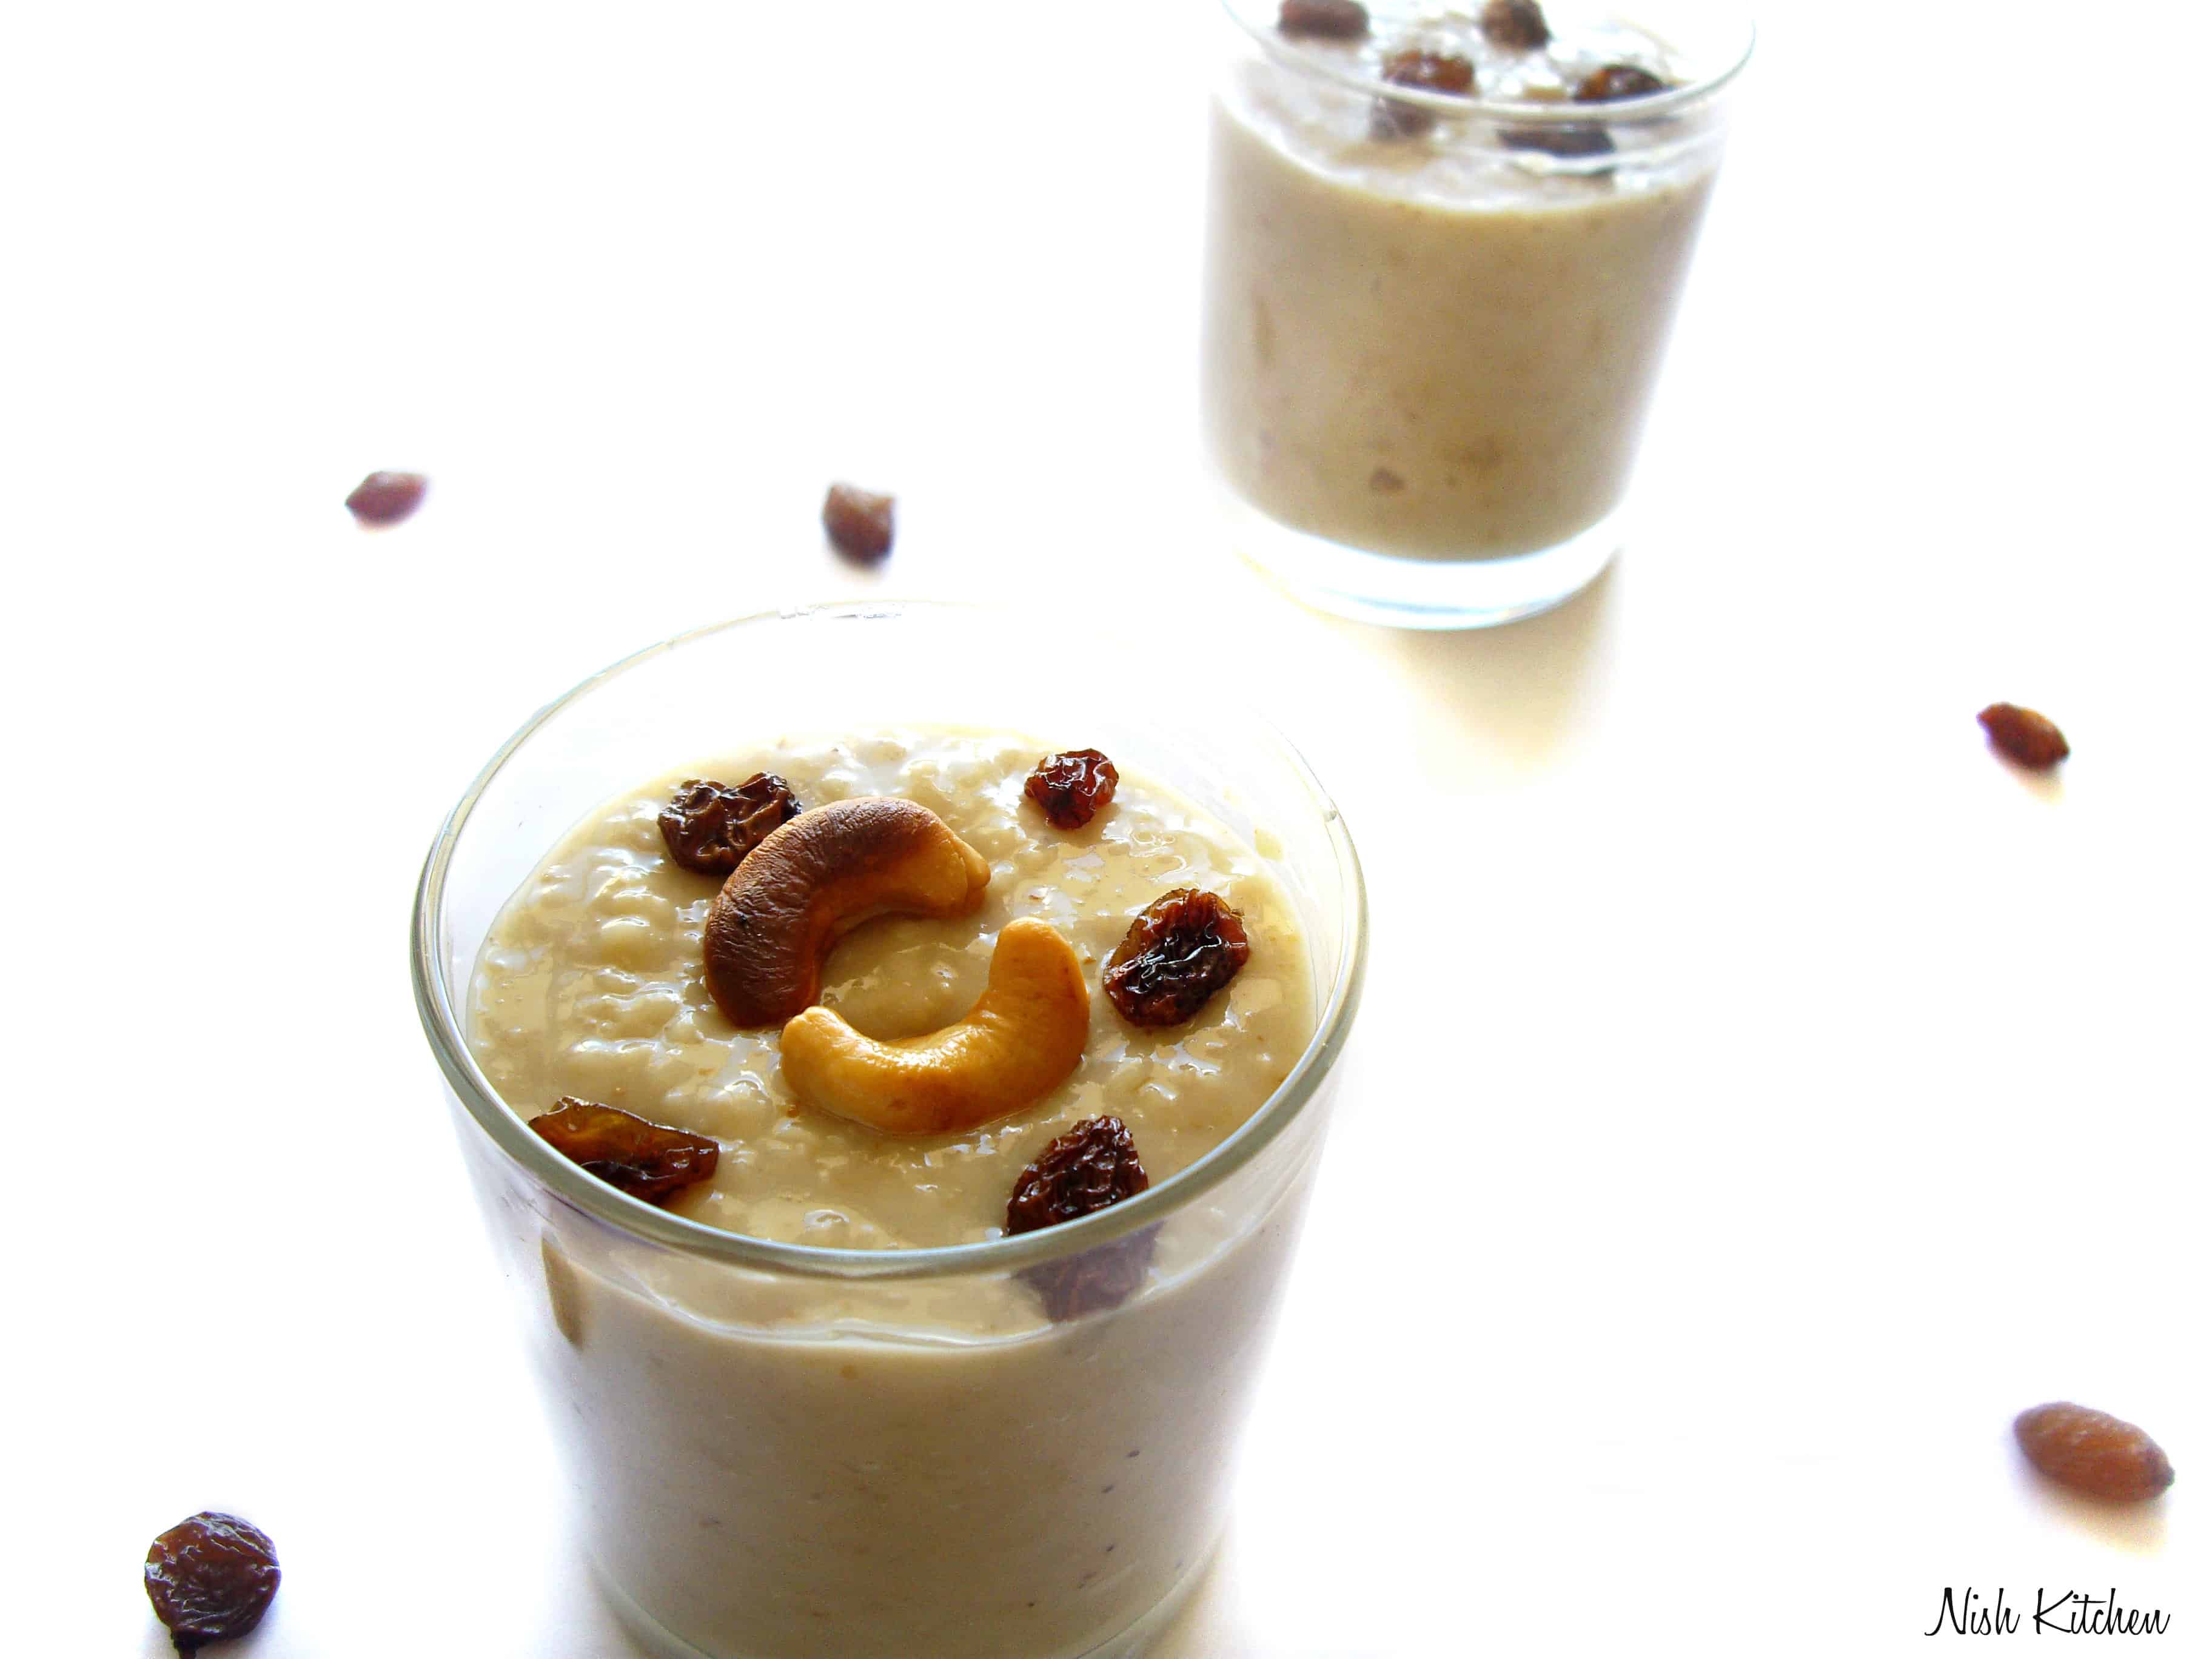 oats payasam | oats pudding oats kheer - using jaggery |nish kitchen